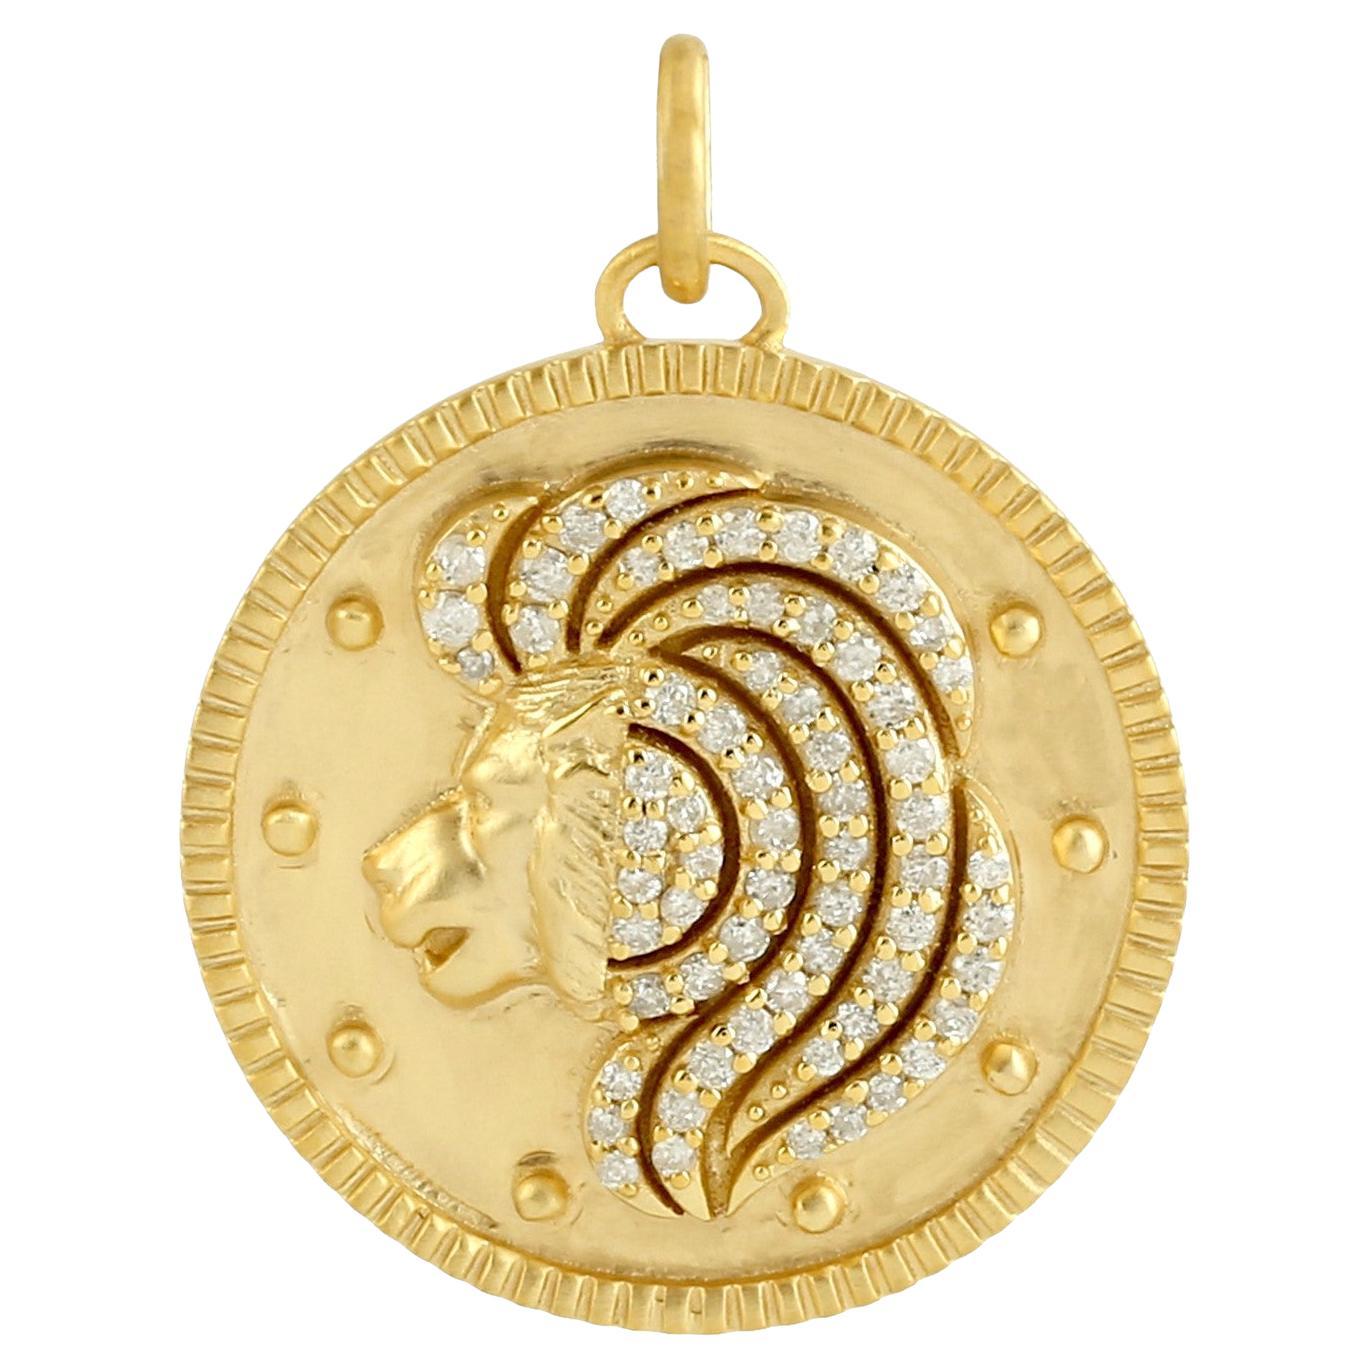 Meghna Jewels Zodiac Leo Medallion Charm 14K Yellow Gold Pendant Necklace